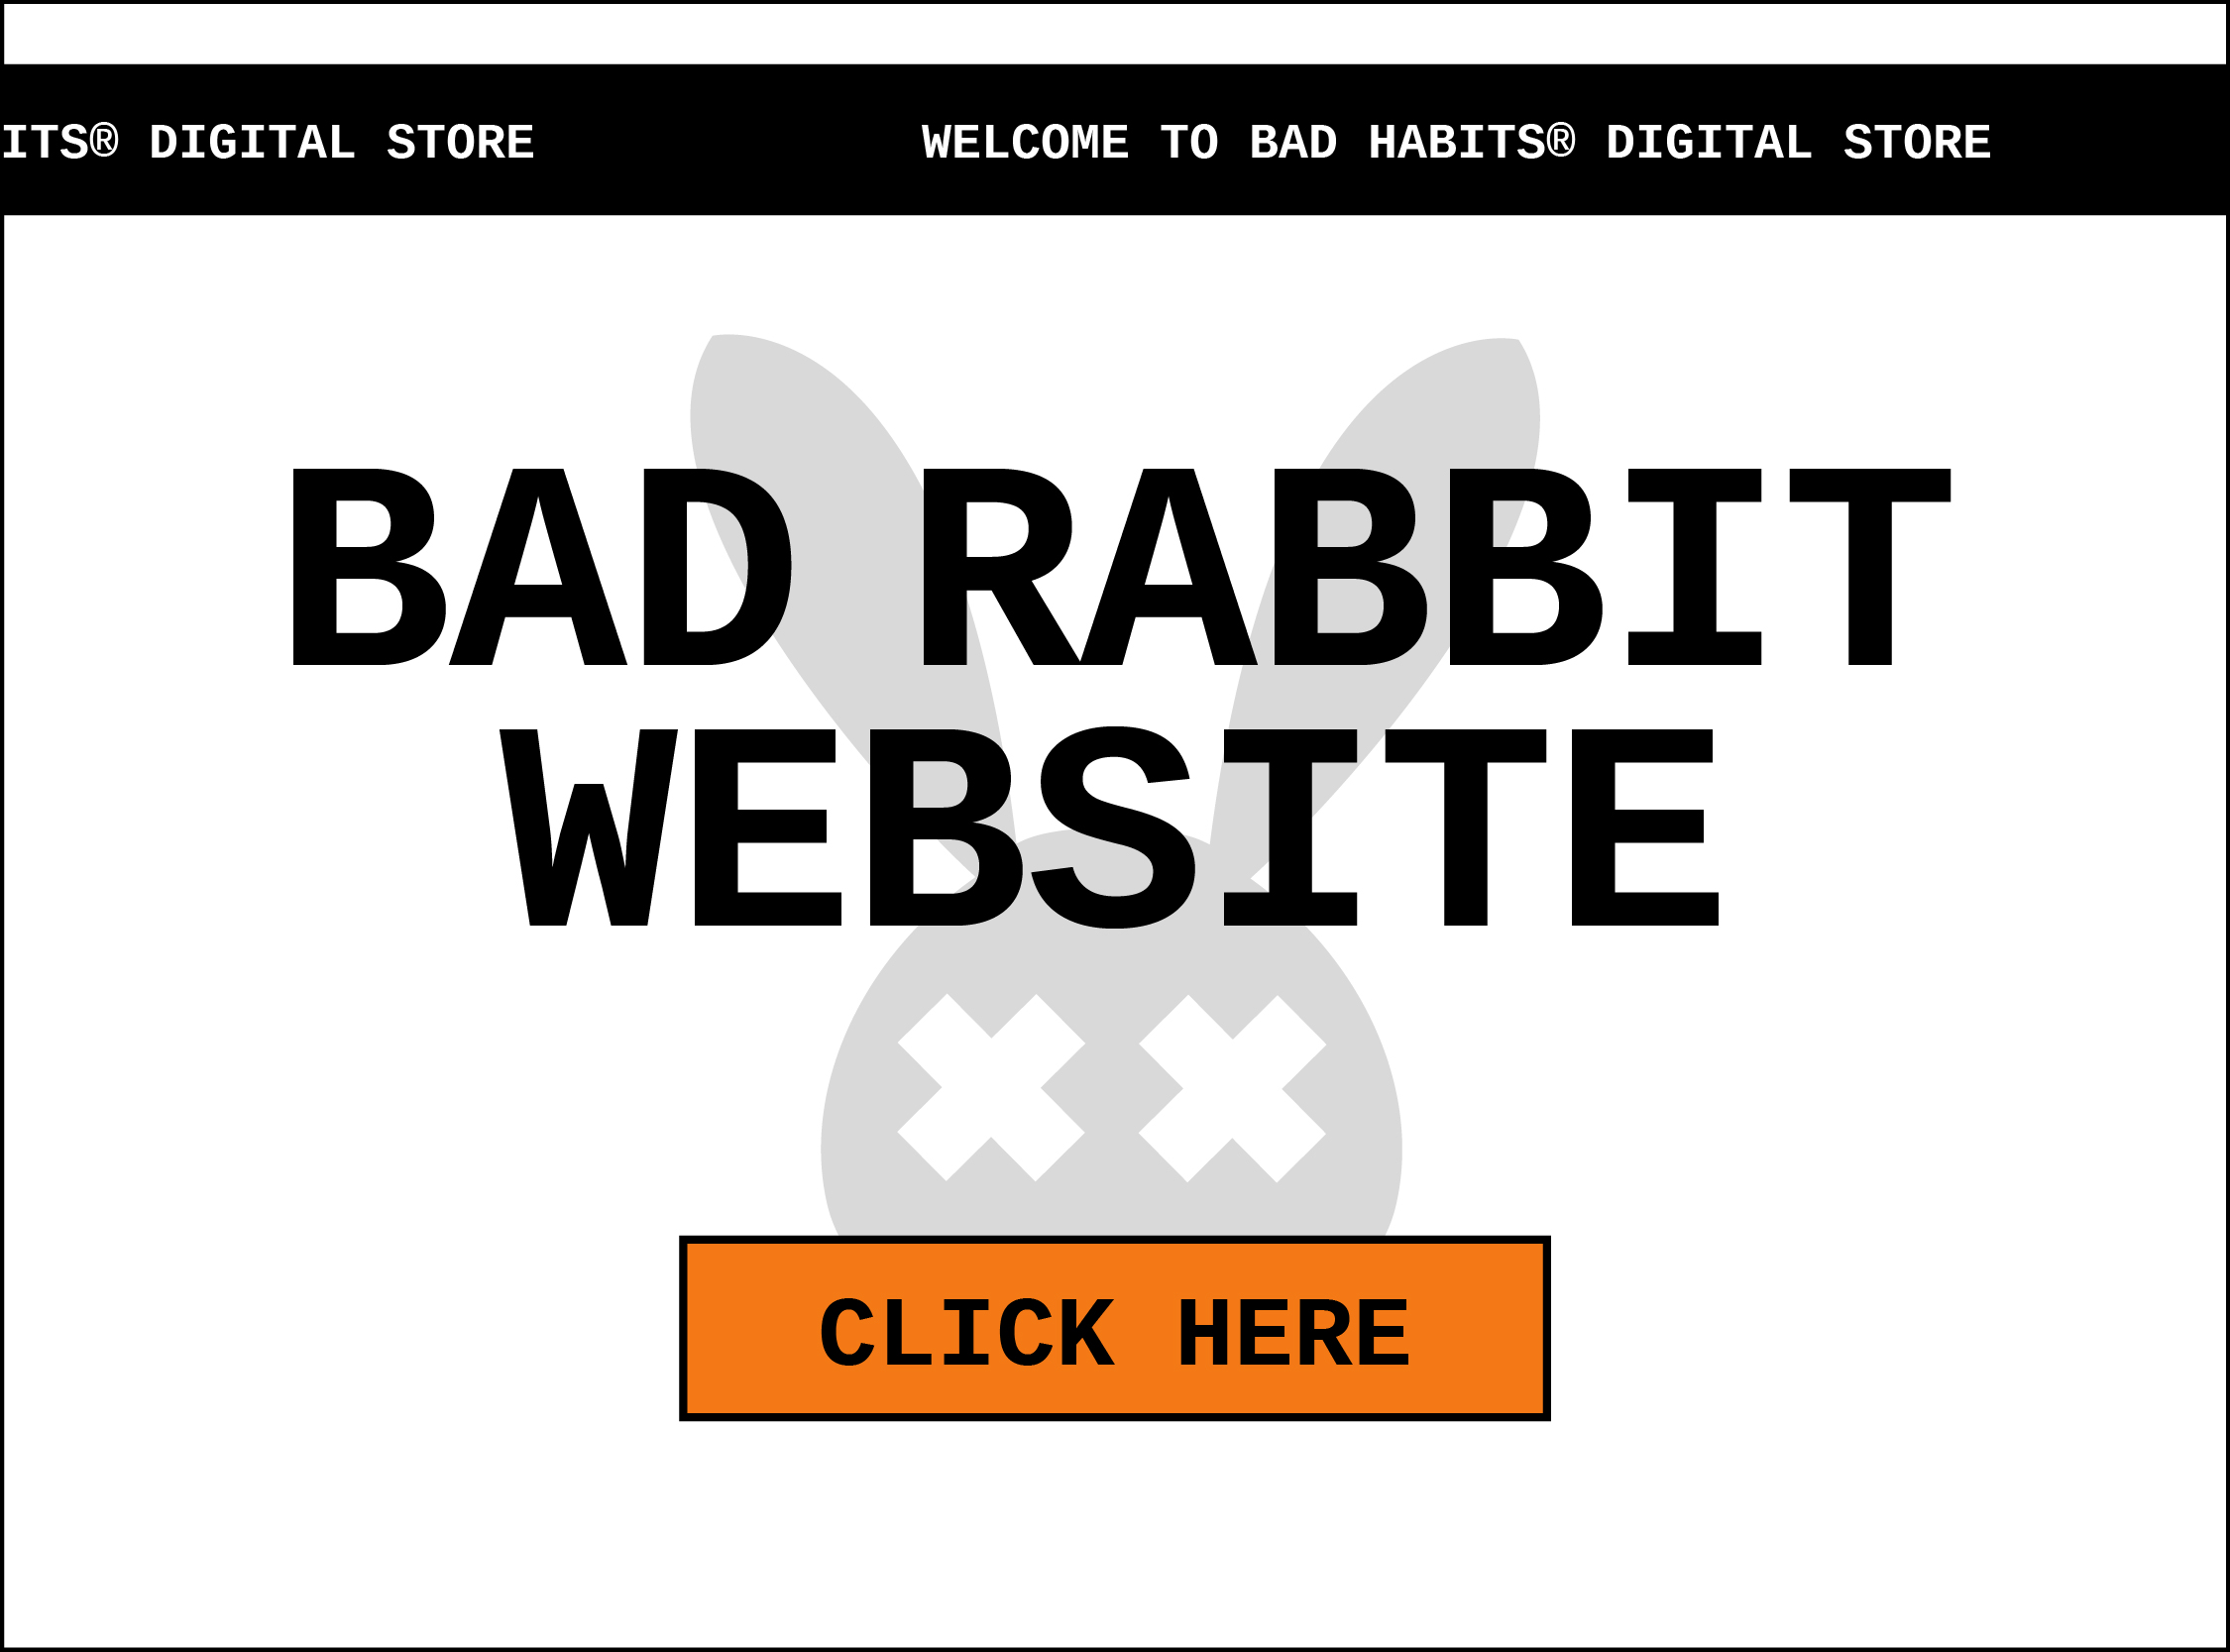 Bad Habits | Baddest Since 2017 – Bad Habits Official Store